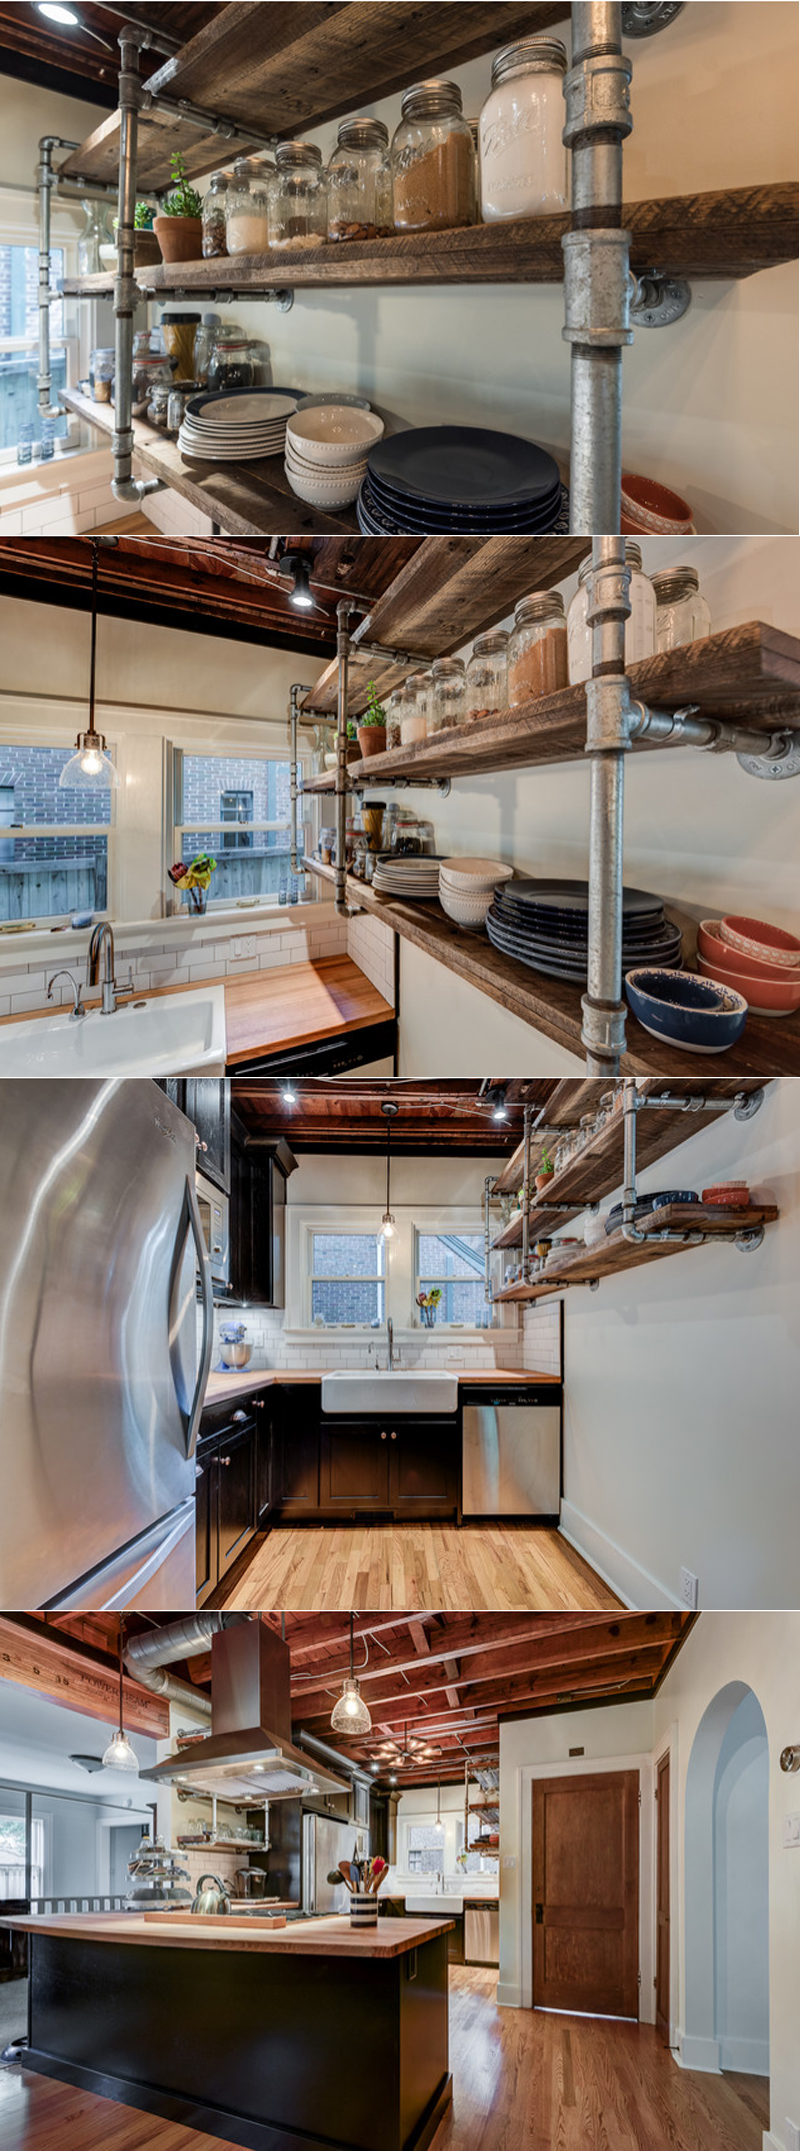 industrial style room design kitchen